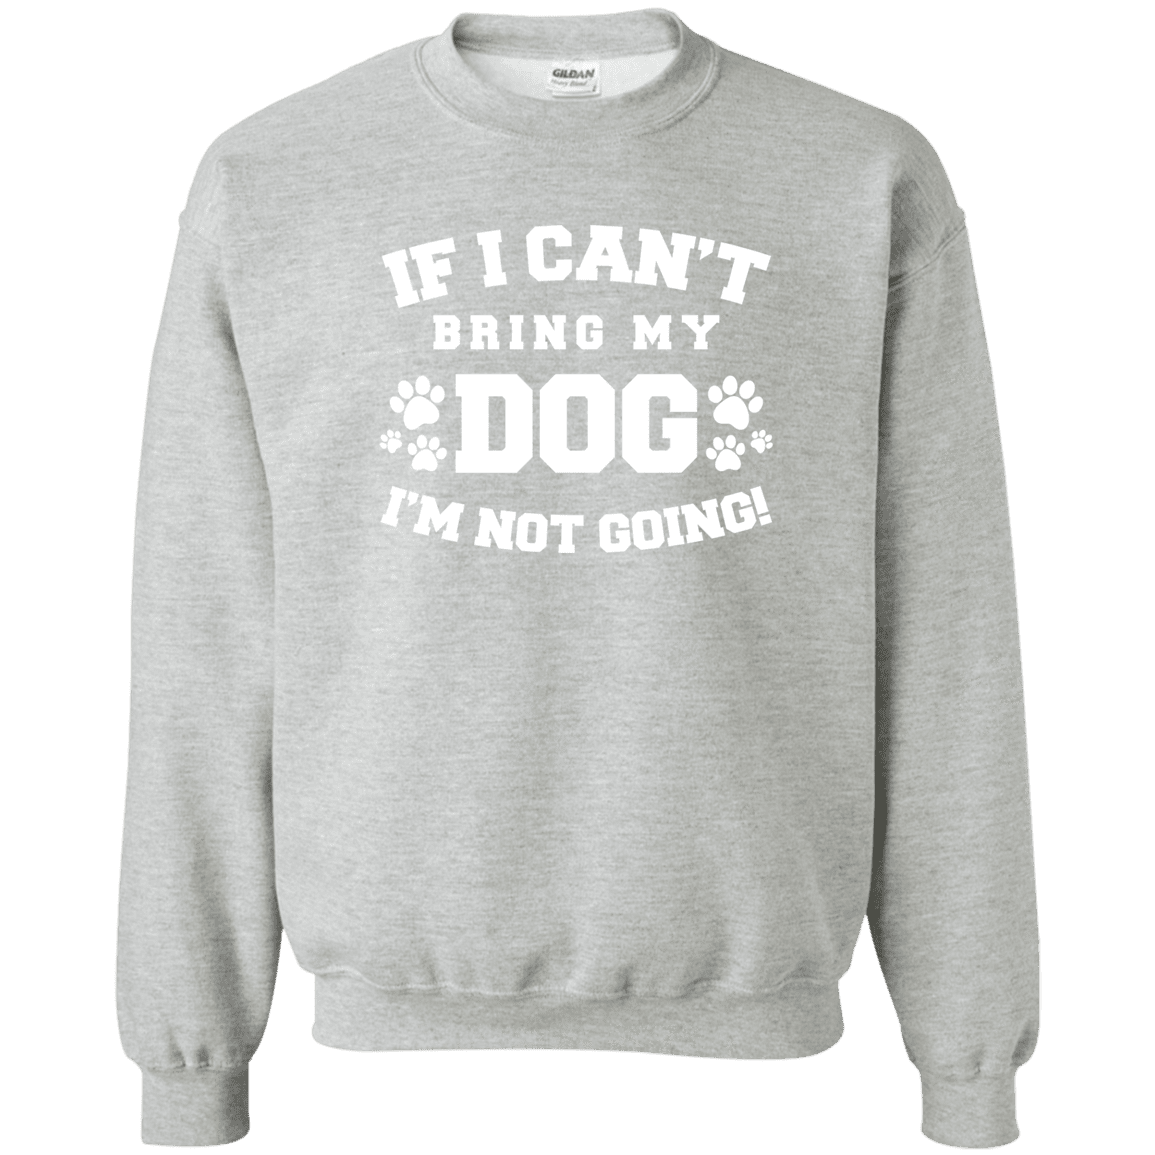 If I Can't Bring My Dog - Sweatshirt.